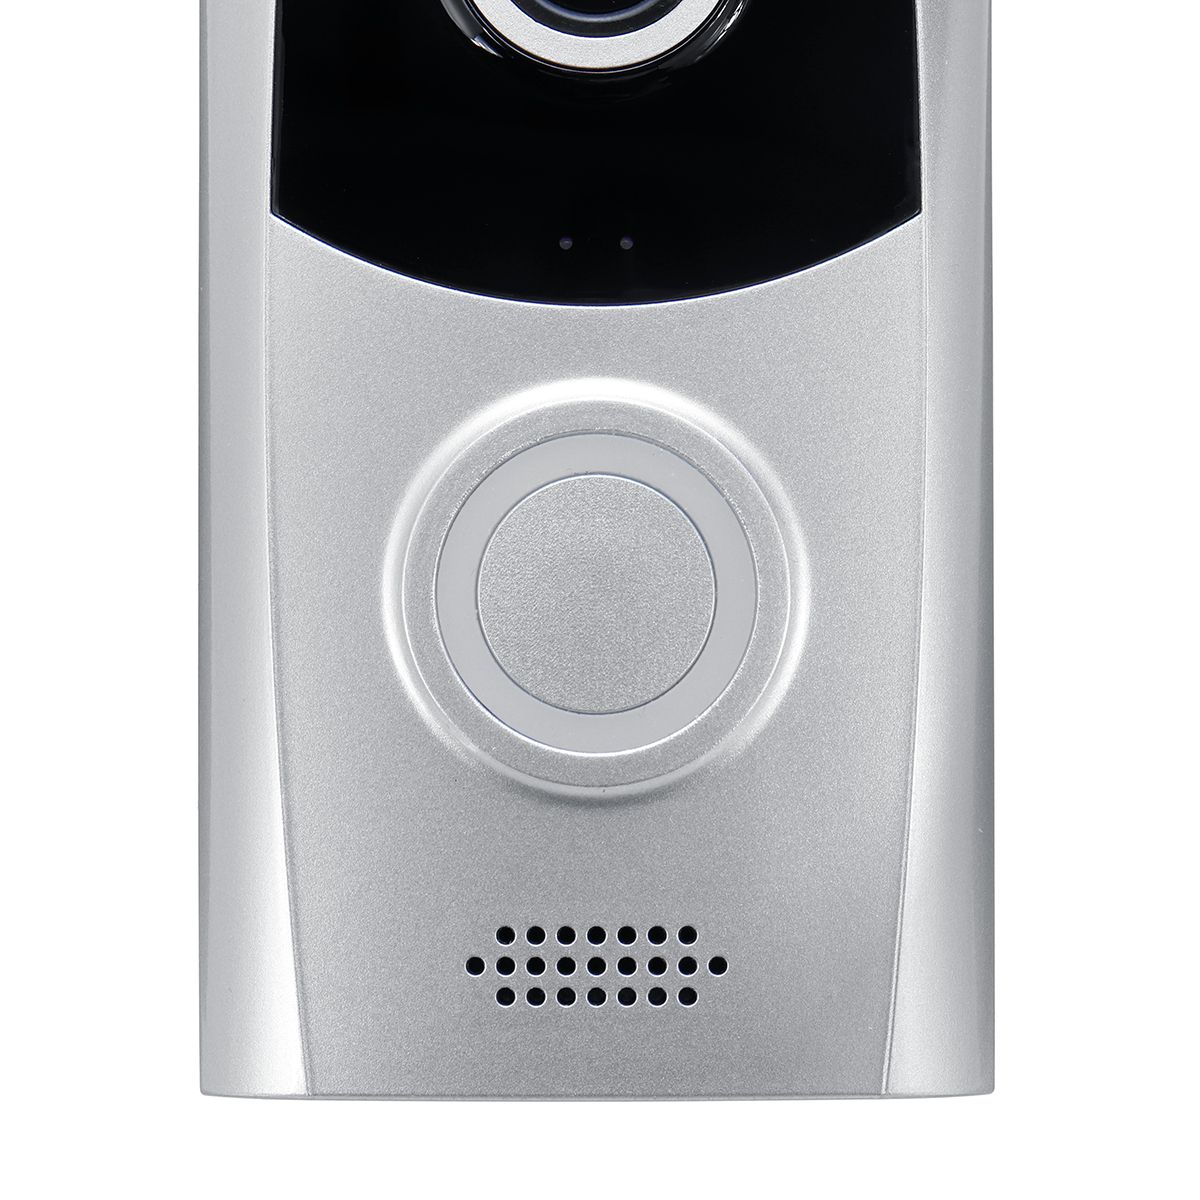 Wireless-WiFi-APP-Remote-Video-Camera-Doorbell-Monitoring-Alarm-Home-Security-1533726